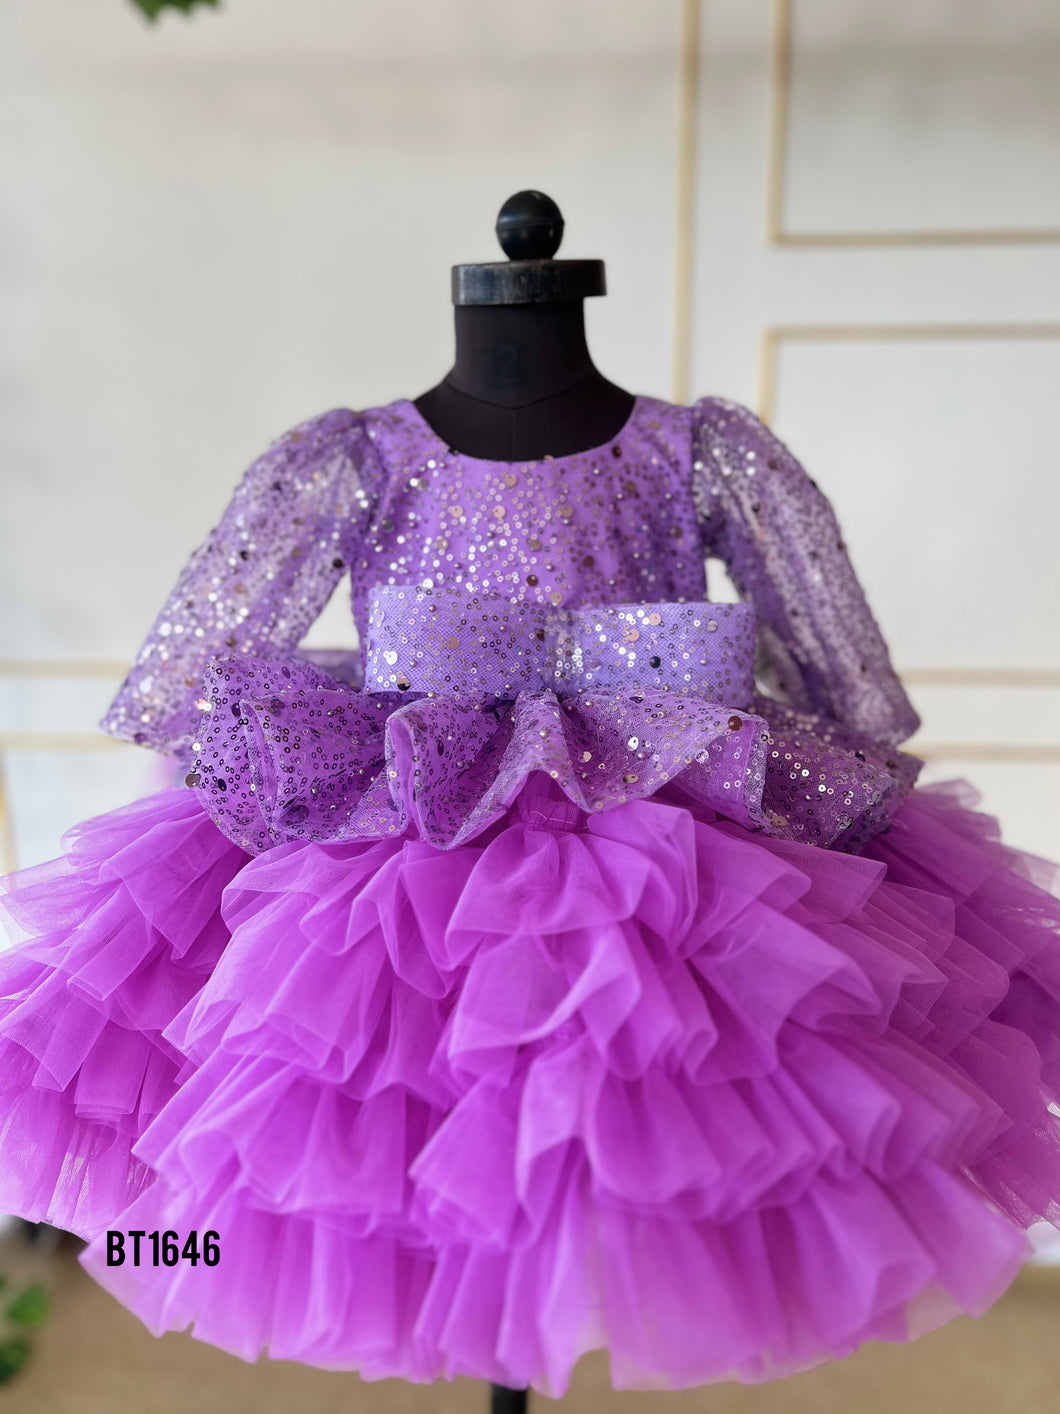 BT1646 Lavender Sparkle Princess Dress - Every Twirl Tells a Tale